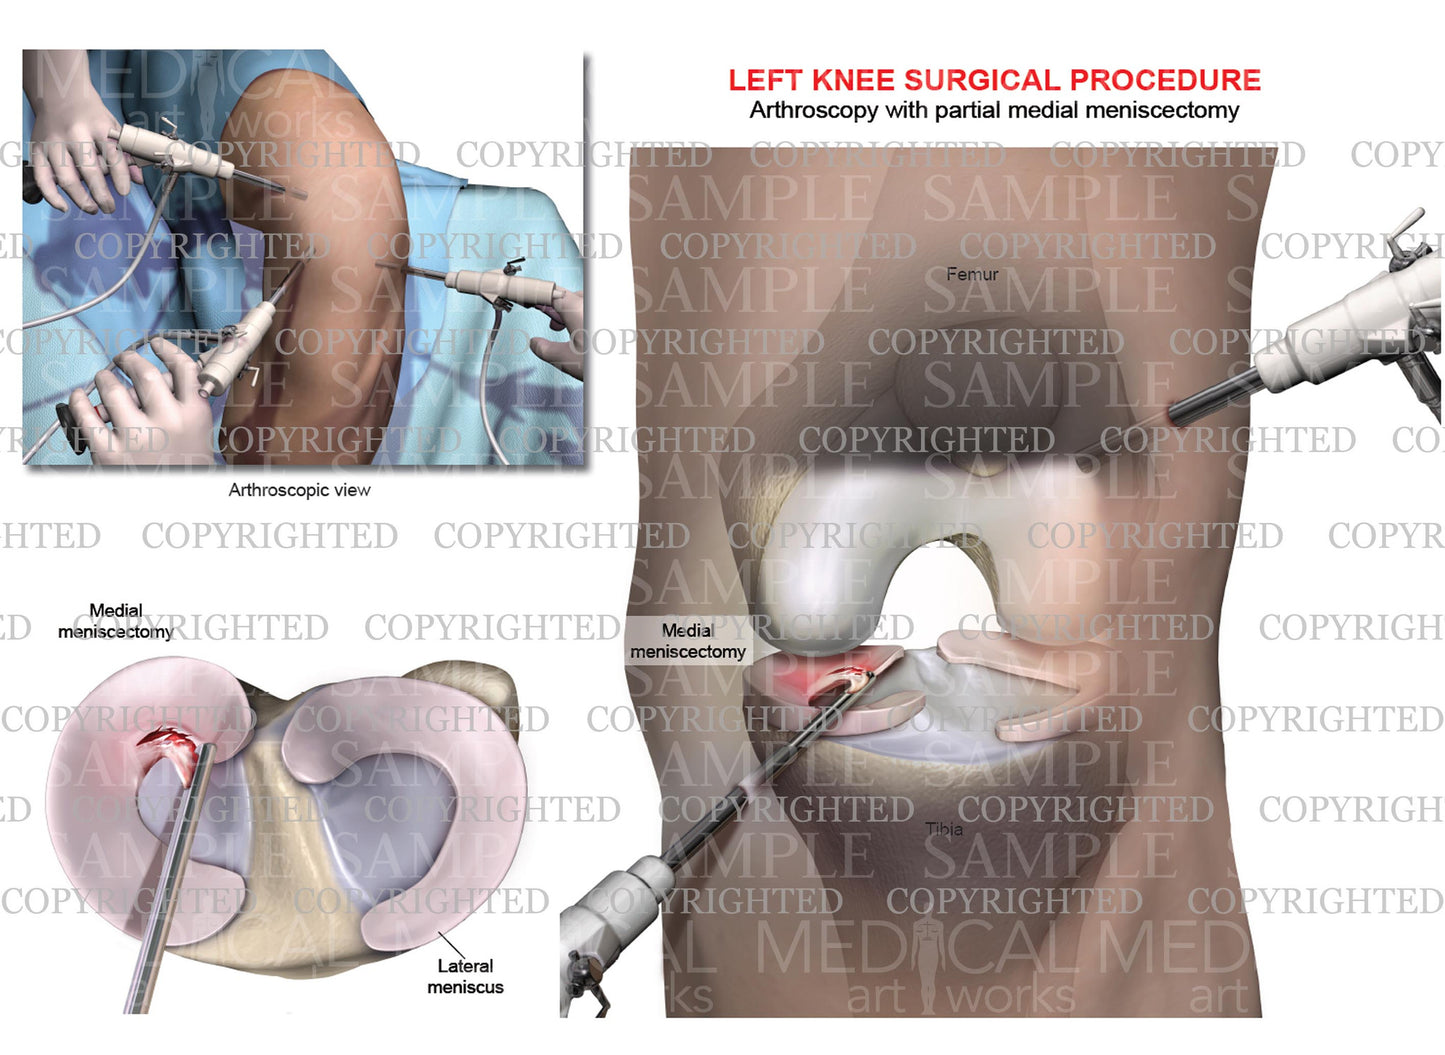 Arthroscopy of left knee with partial medial meniscectomy